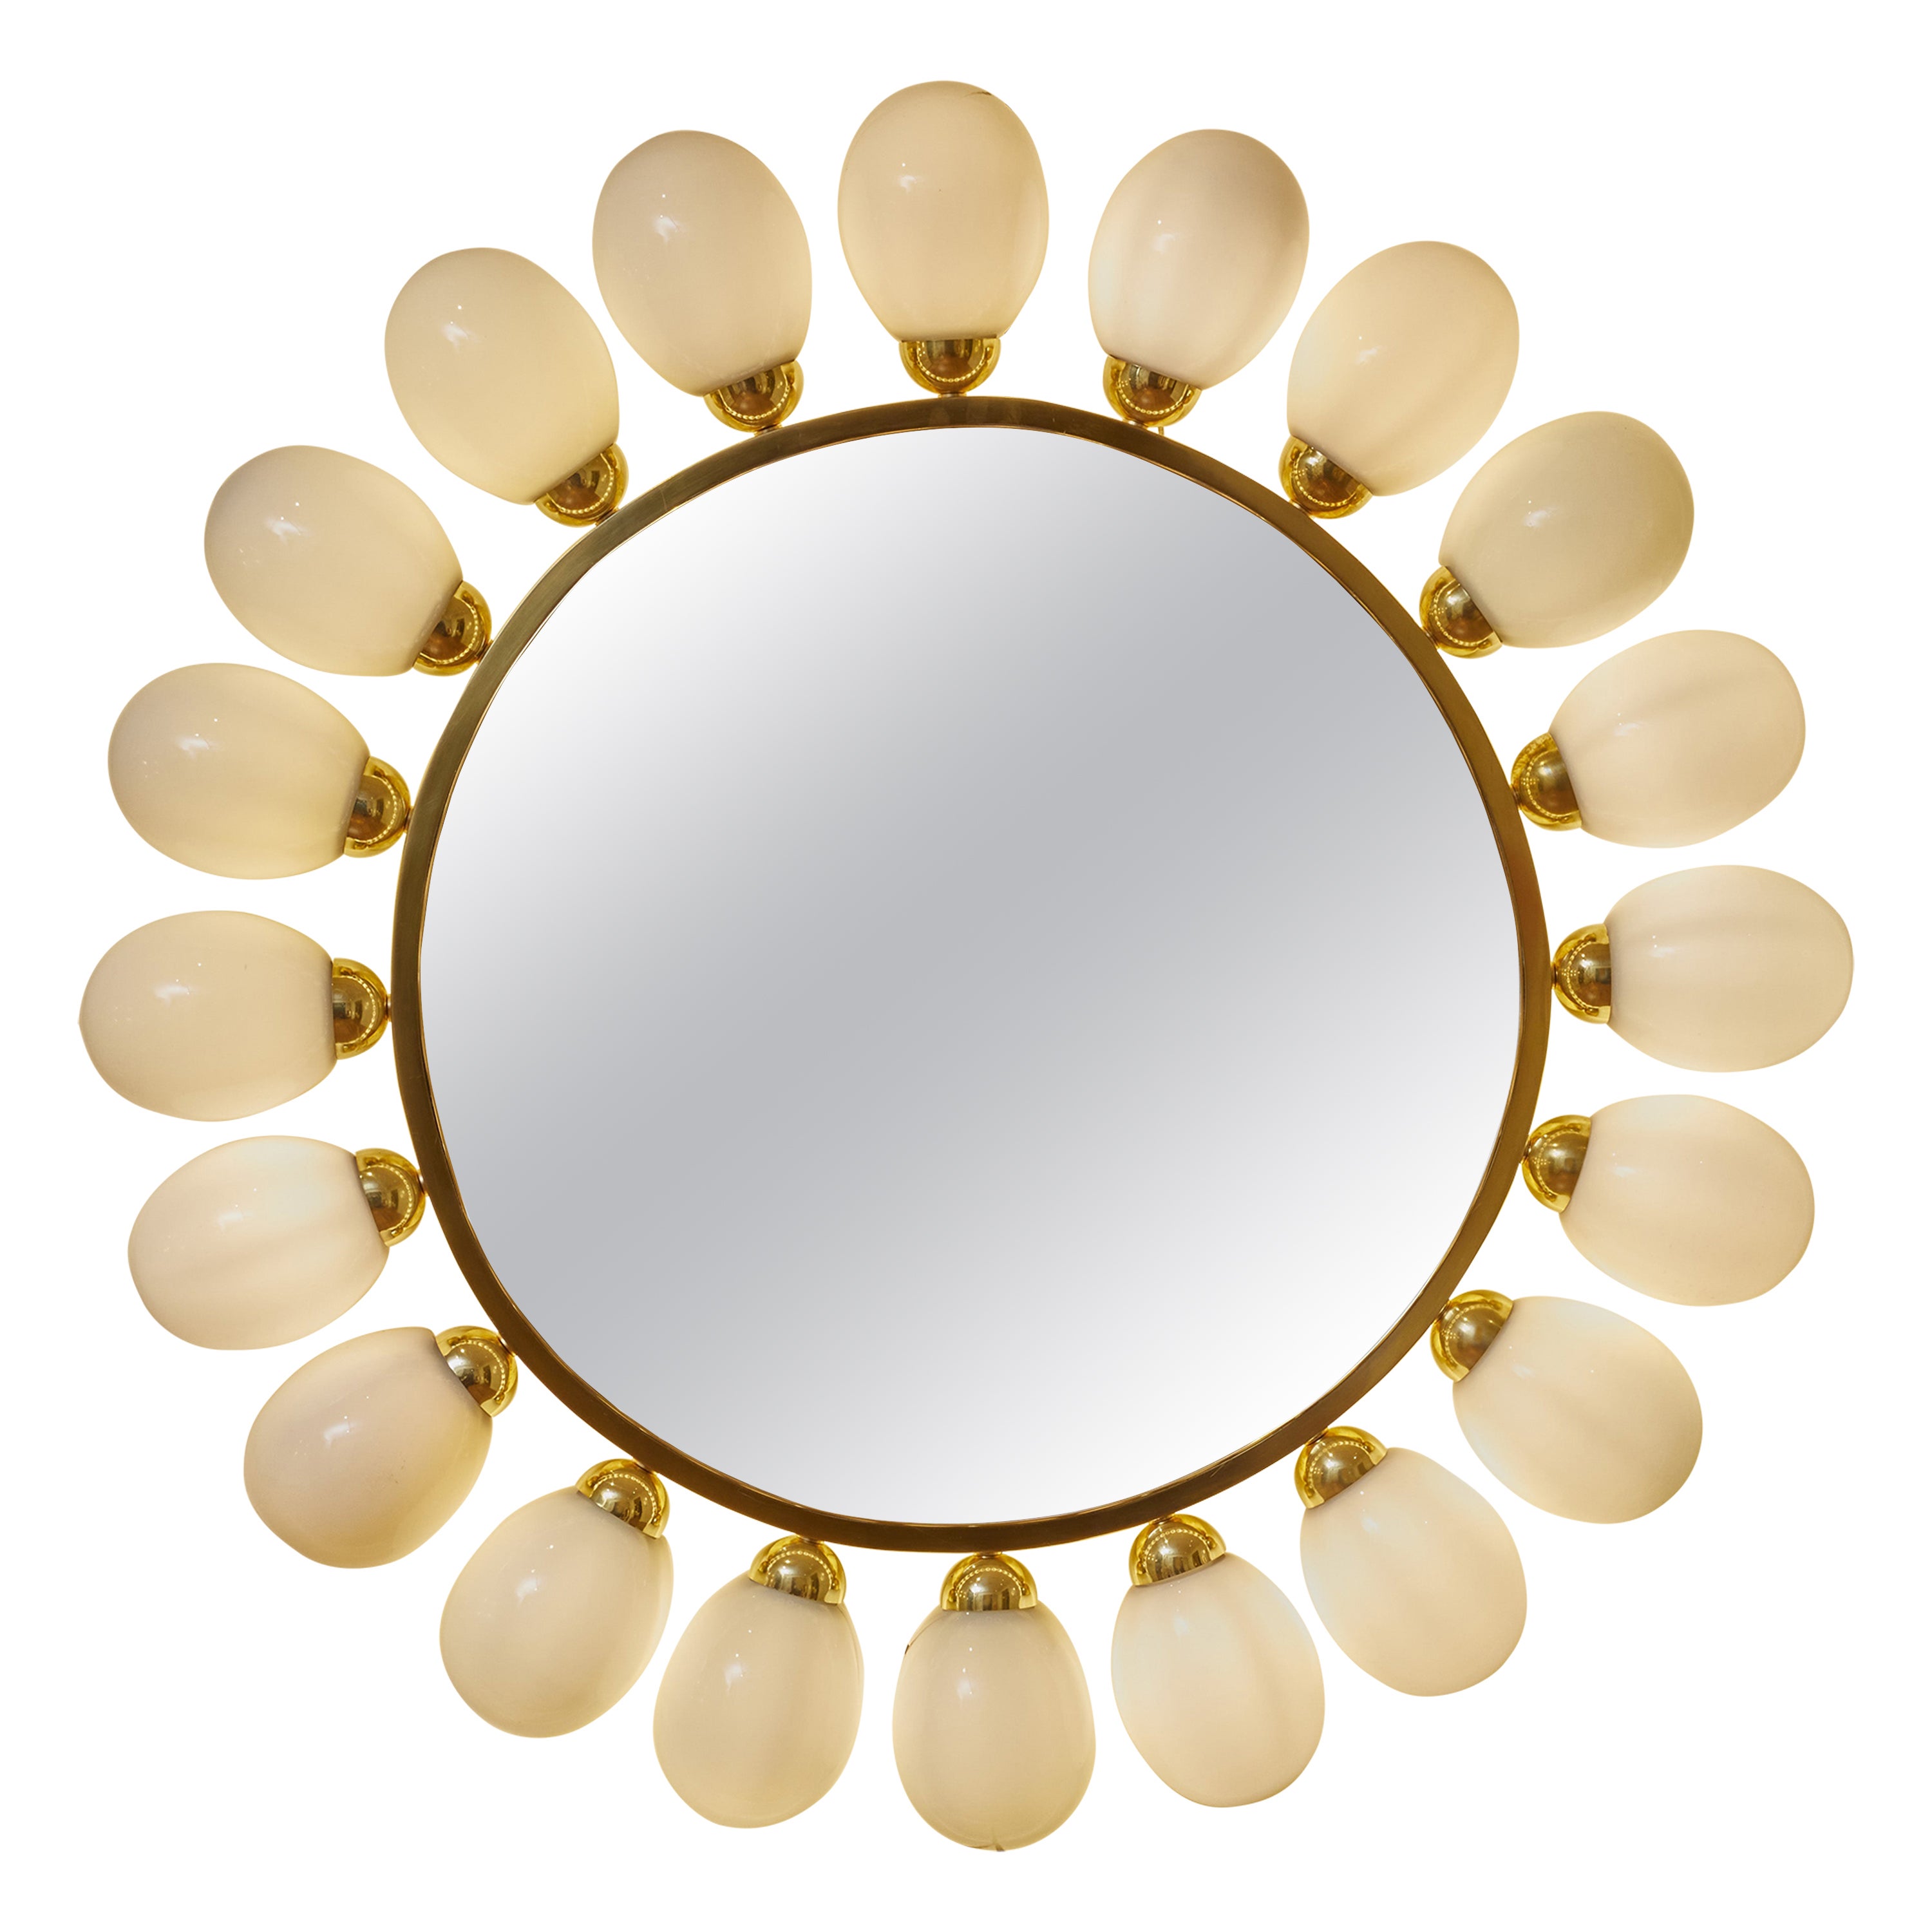 "Sun" mirror by Studio Glustin